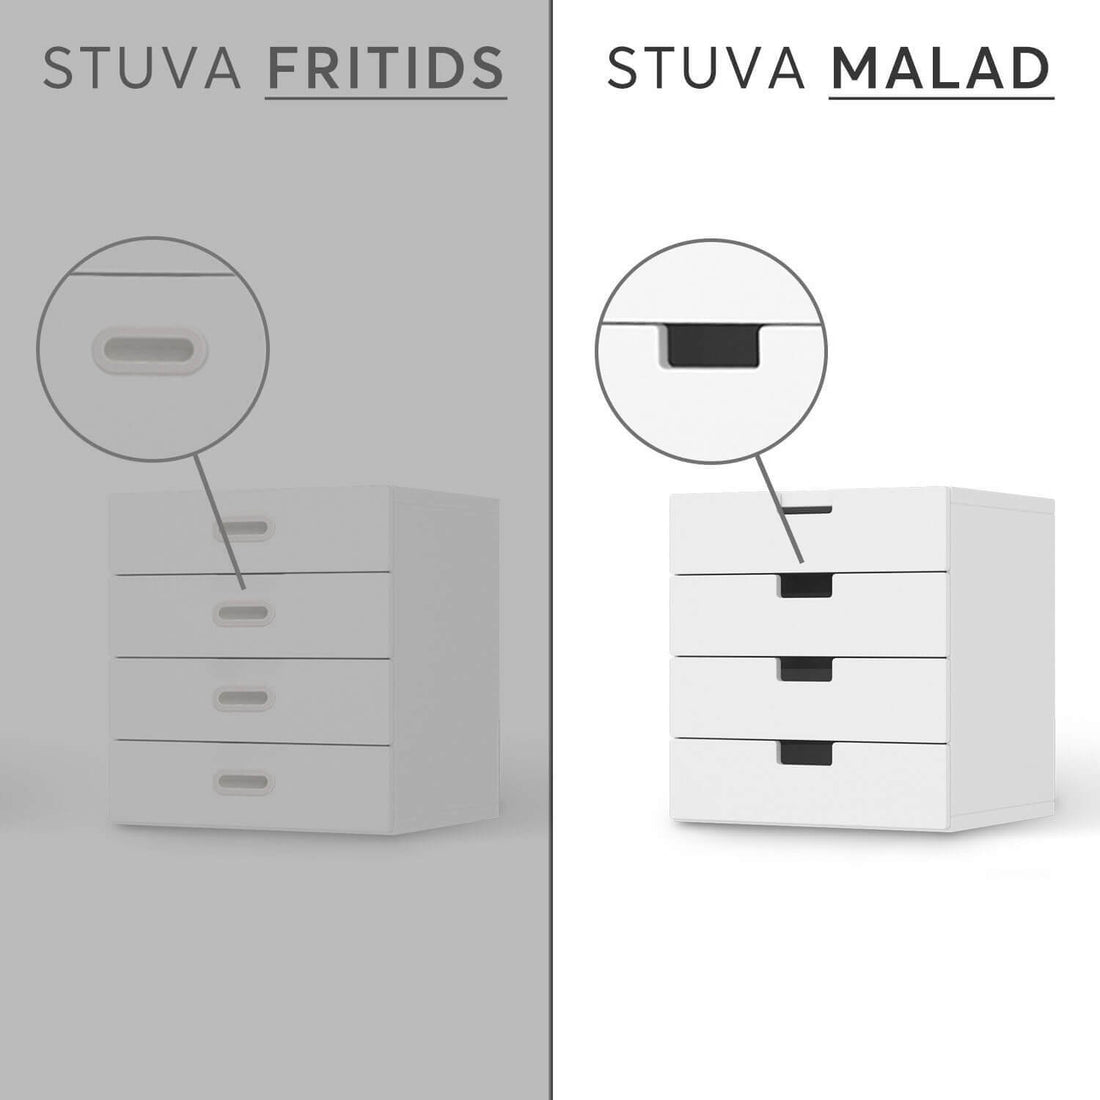 Vergleich IKEA Stuva Malad / Fritids - Pako